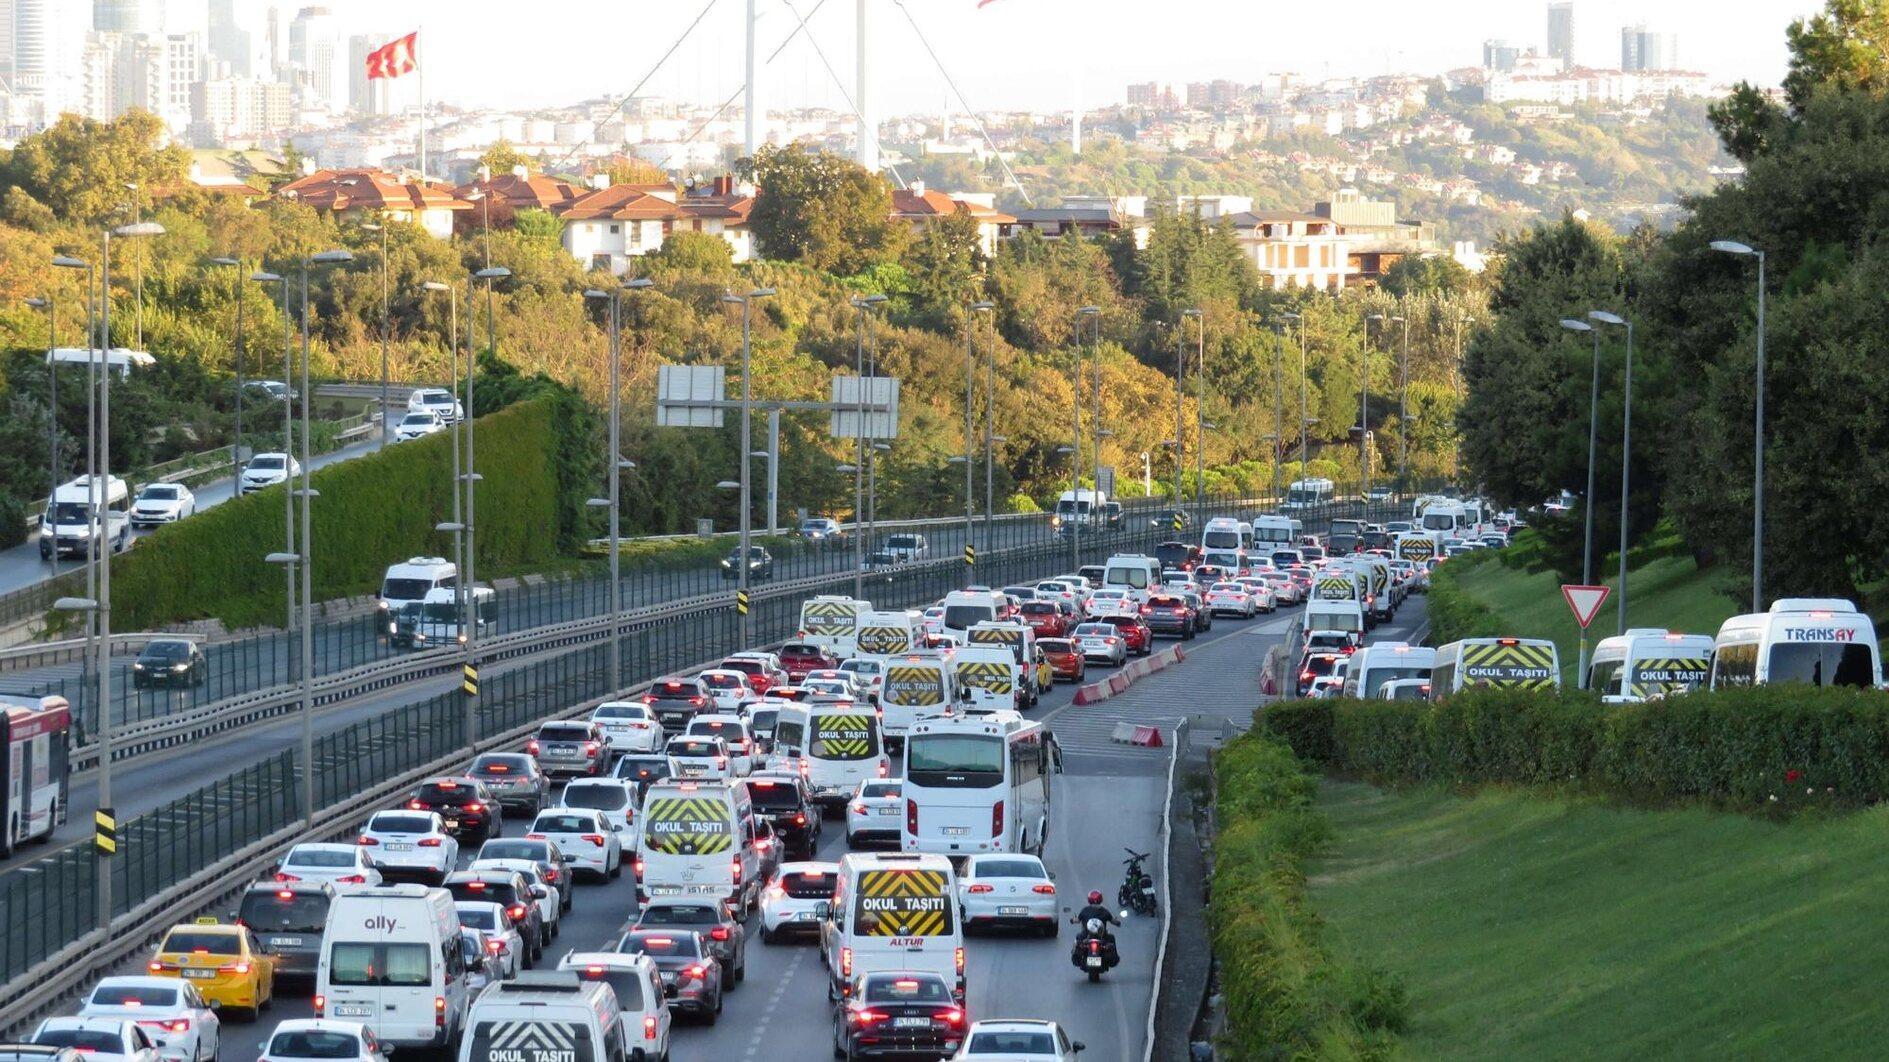 Millions return from Eid holiday, causing traffic jams